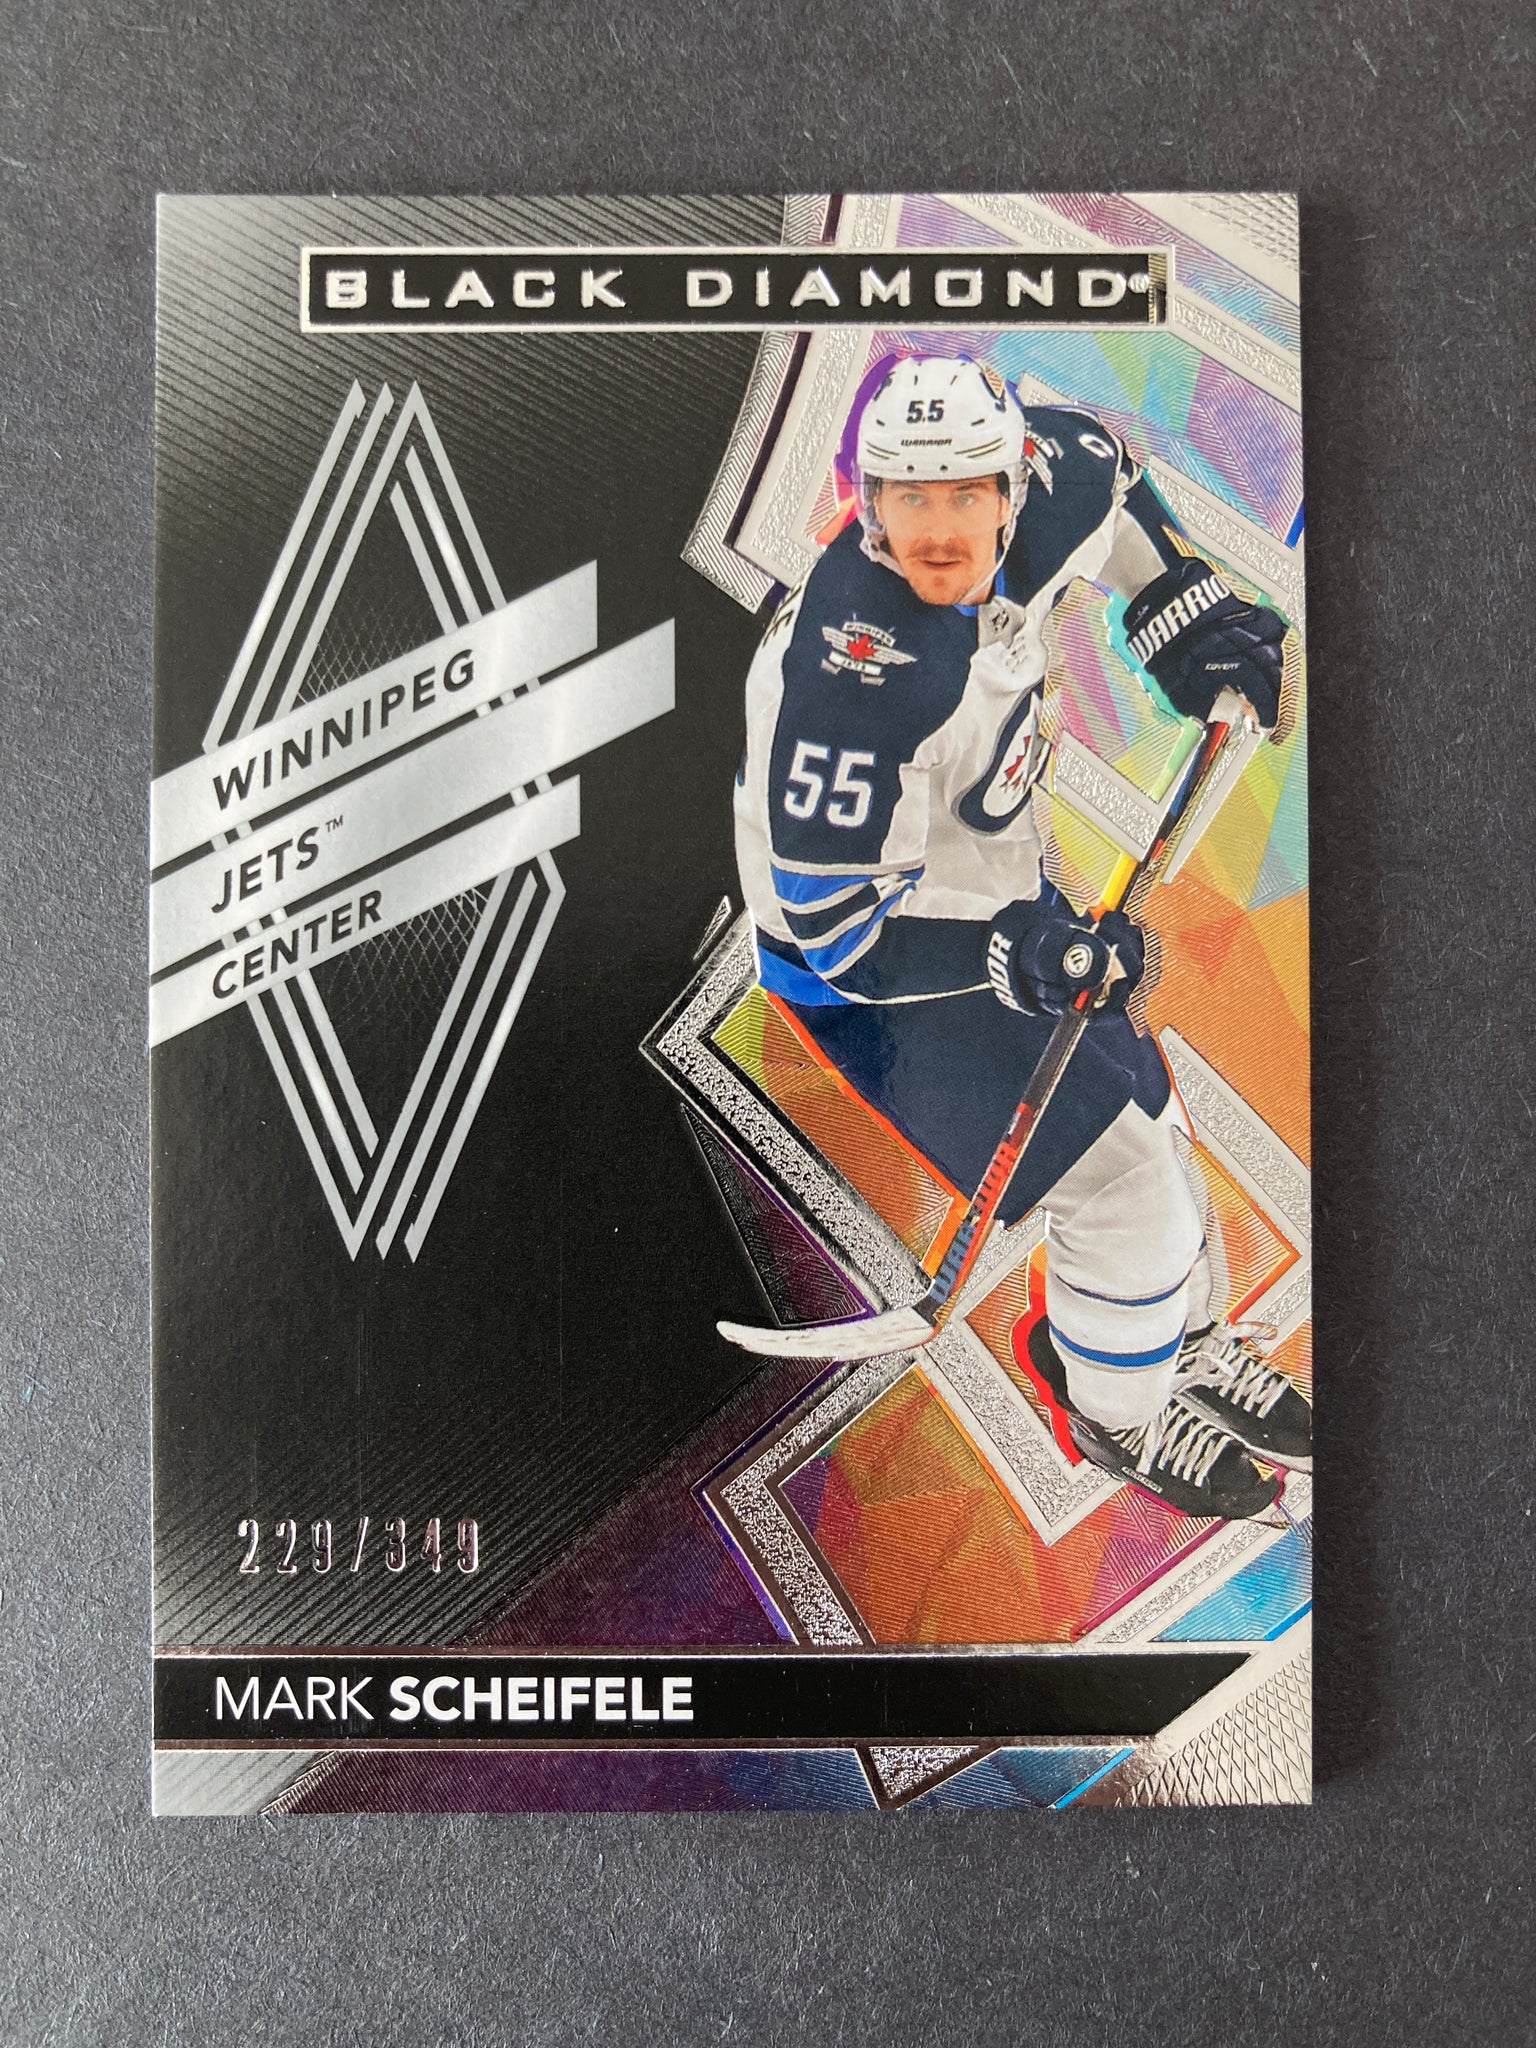 Mark Scheifele 2020 Black Diamond #d /349 Winnipeg Jets Upper Deck